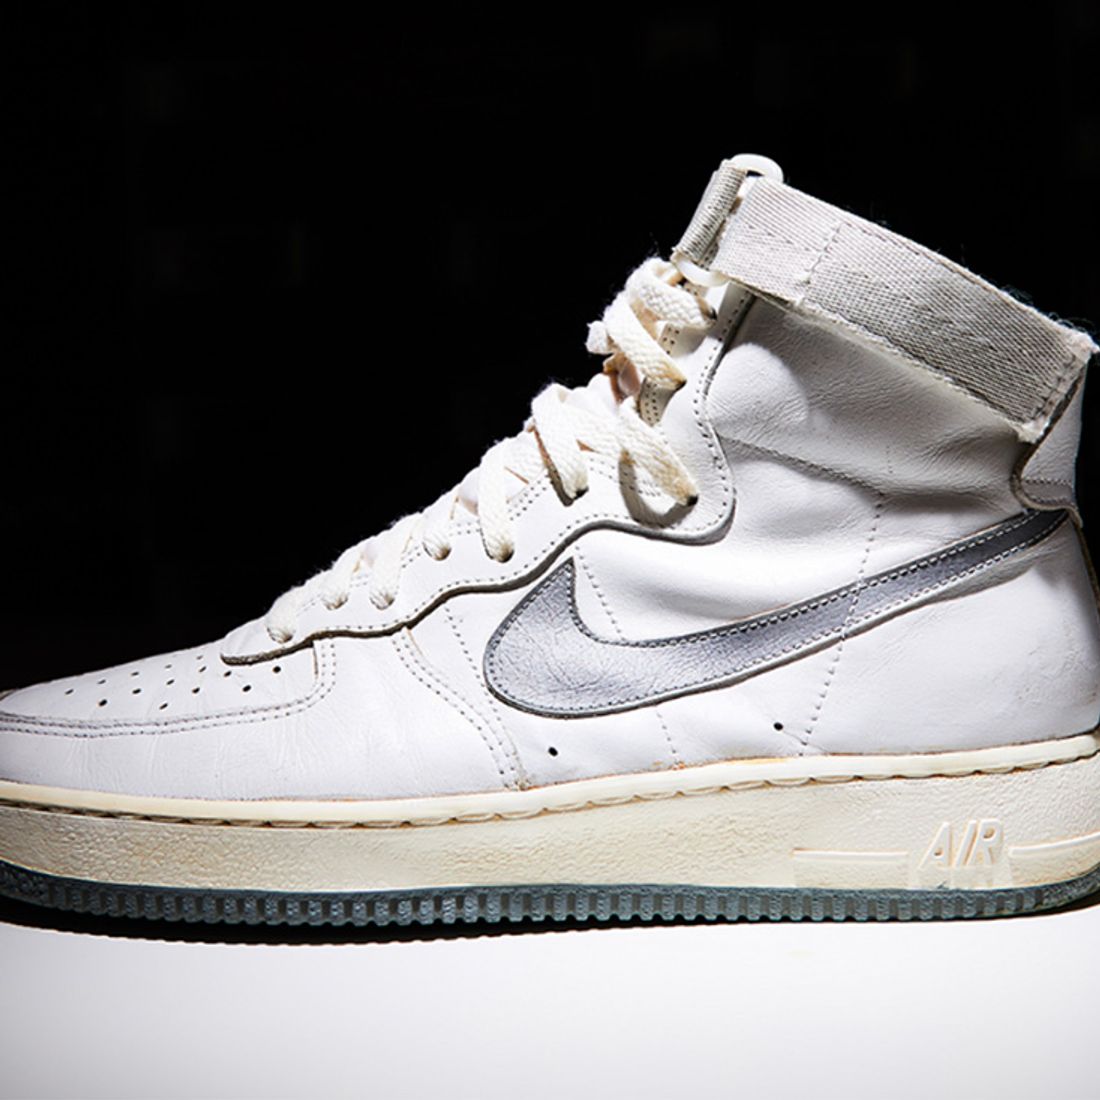 Nike Tear Away the Air Force 1 - Sneaker Freaker